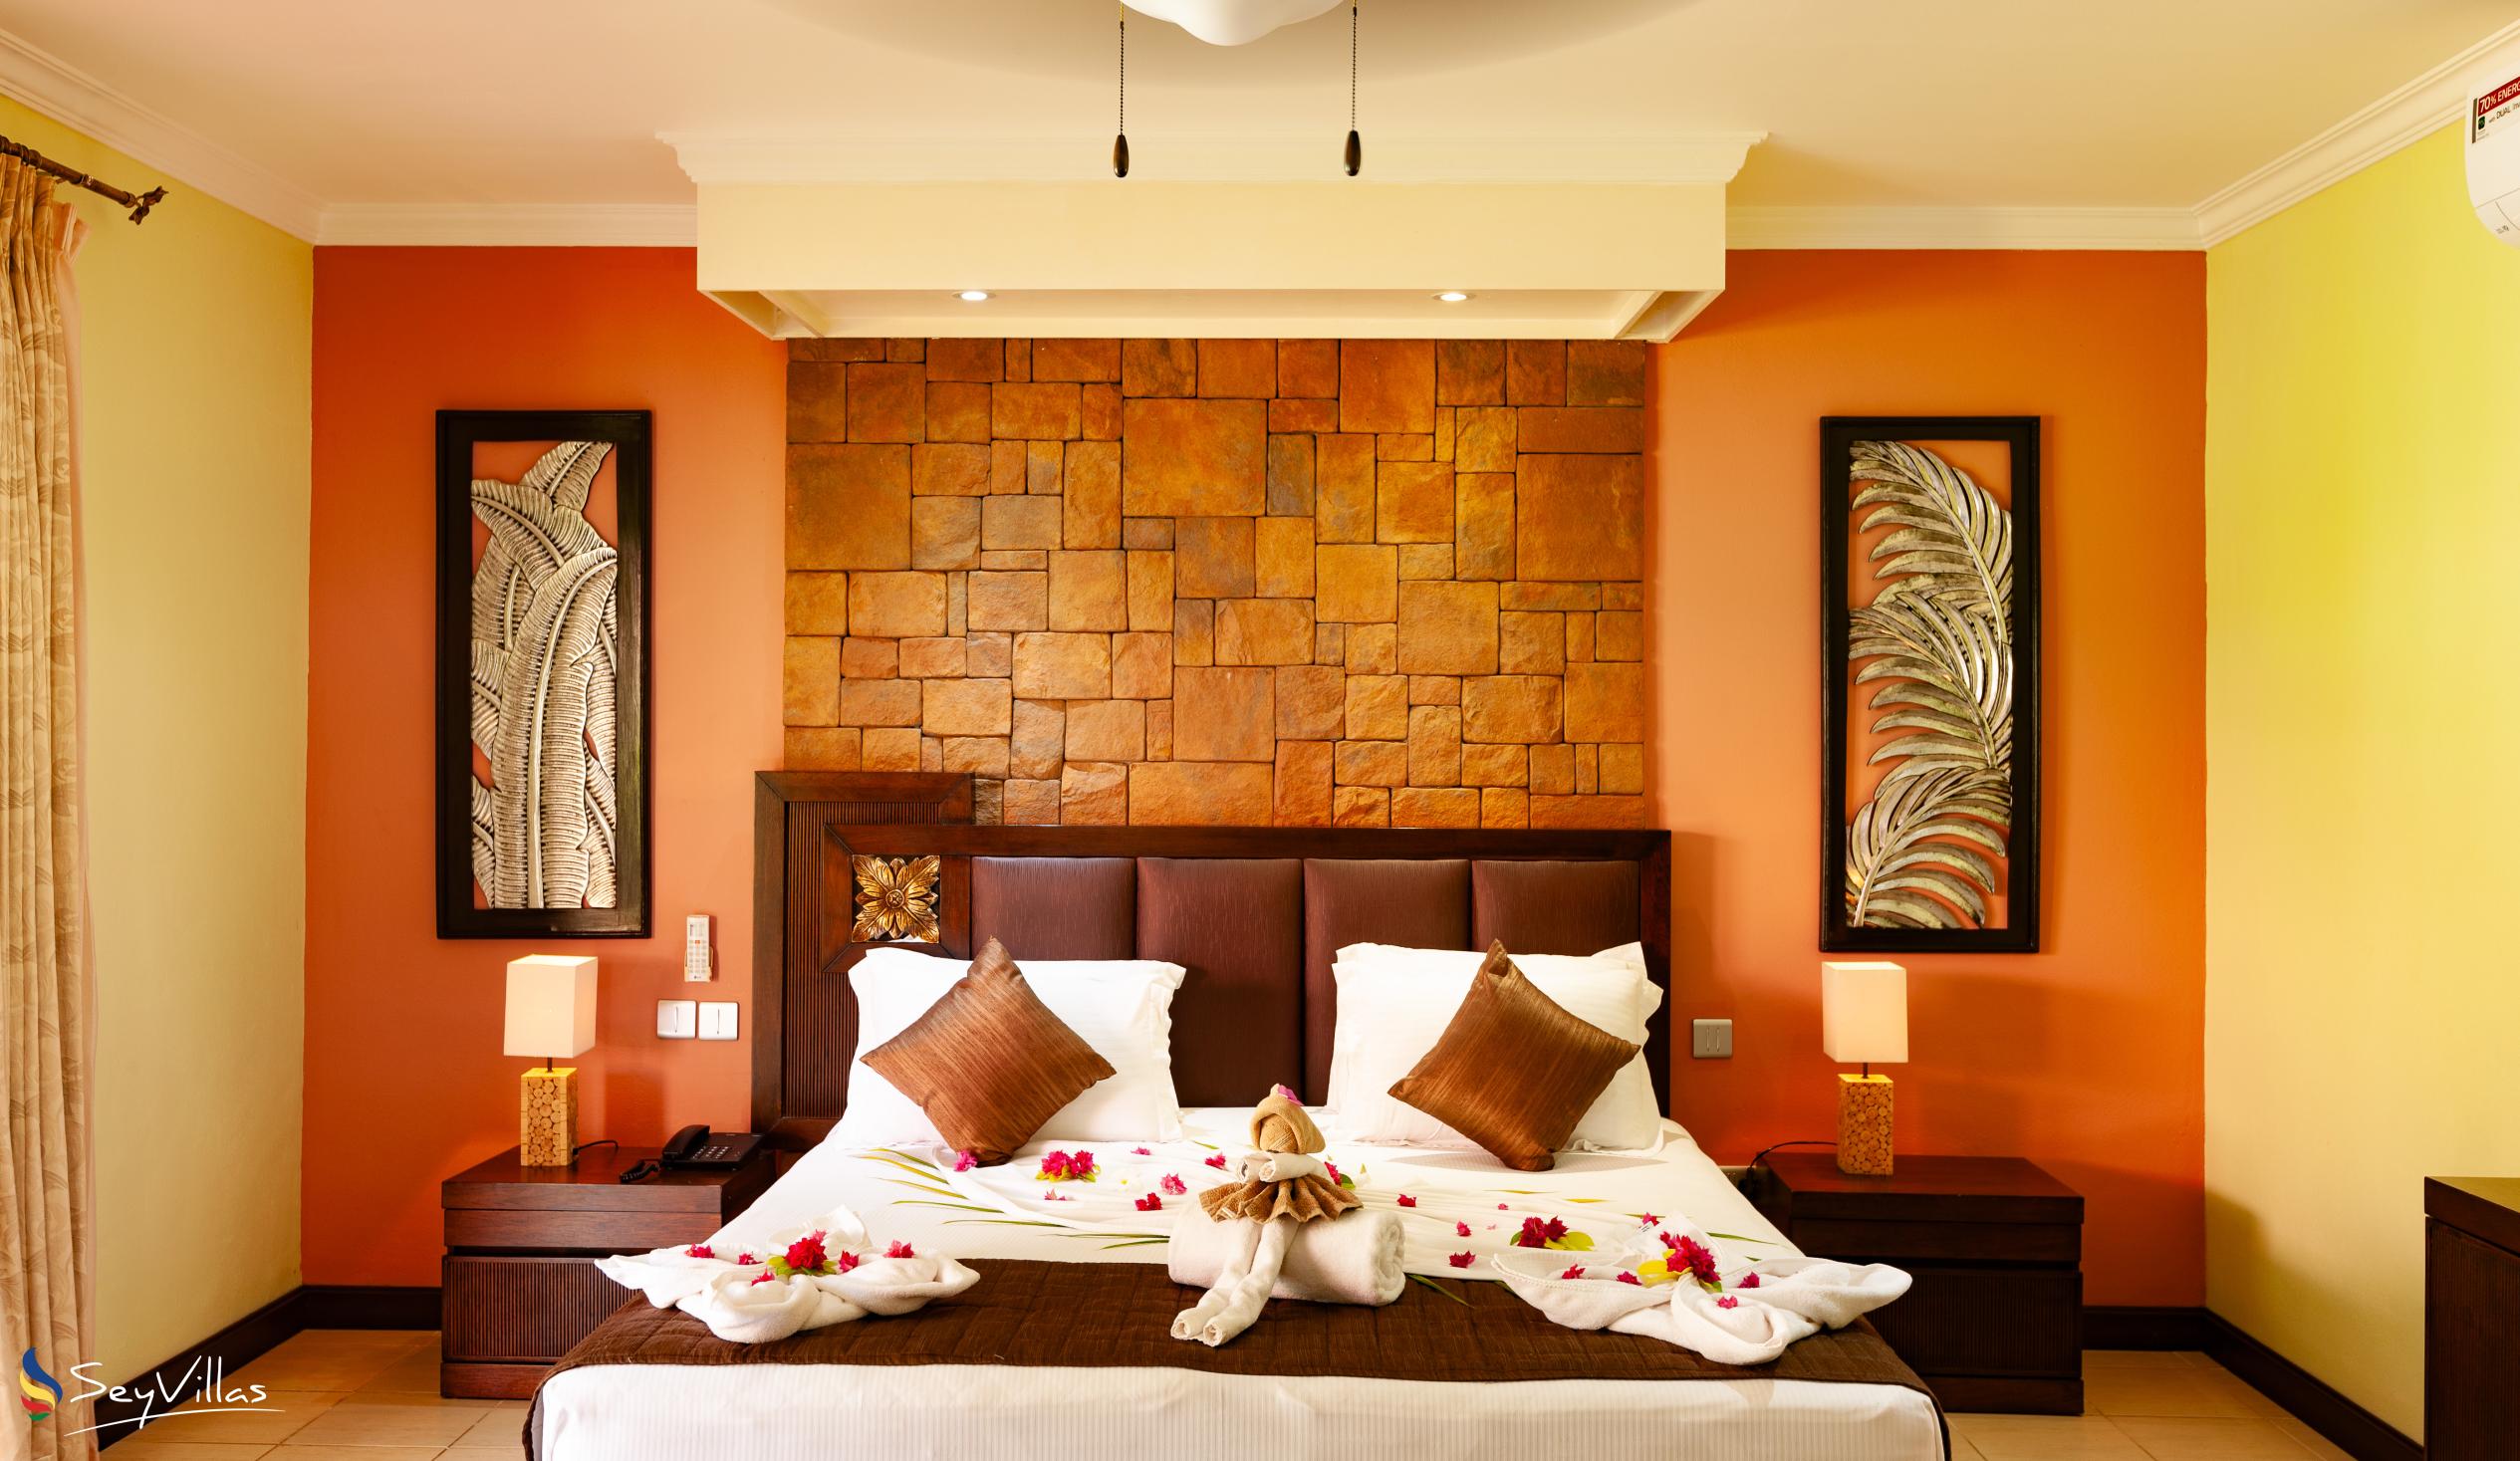 Photo 42: Oasis Hotel, Restaurant & Spa - Superior Room - Praslin (Seychelles)